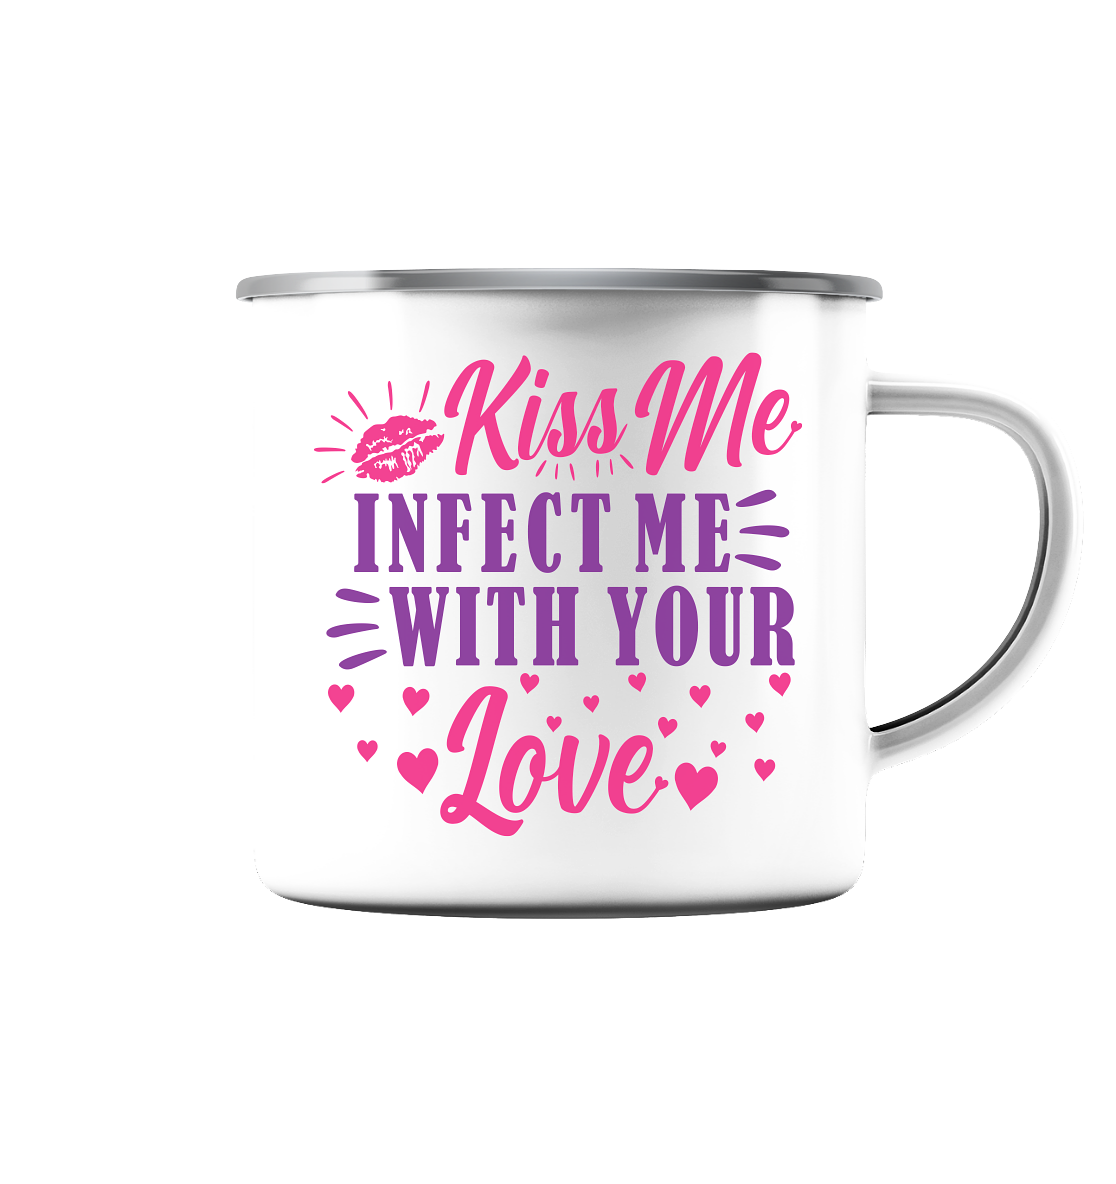 Kiss me infect me with your love - enamel mug